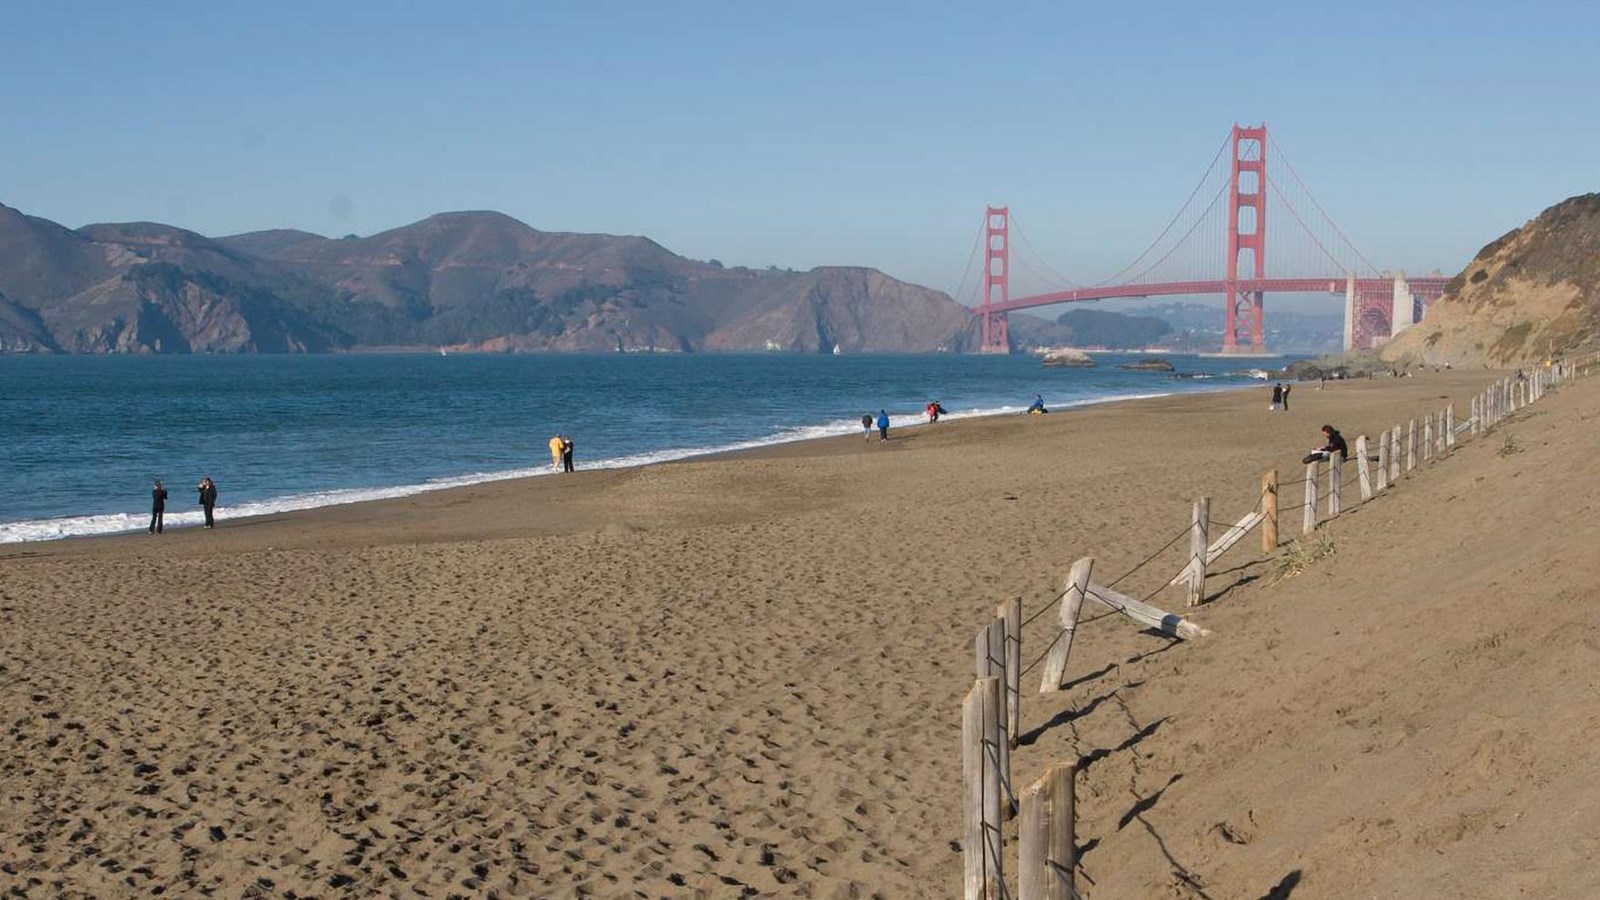 View of Baker Beach looking towards the Golden Gate Bridge.